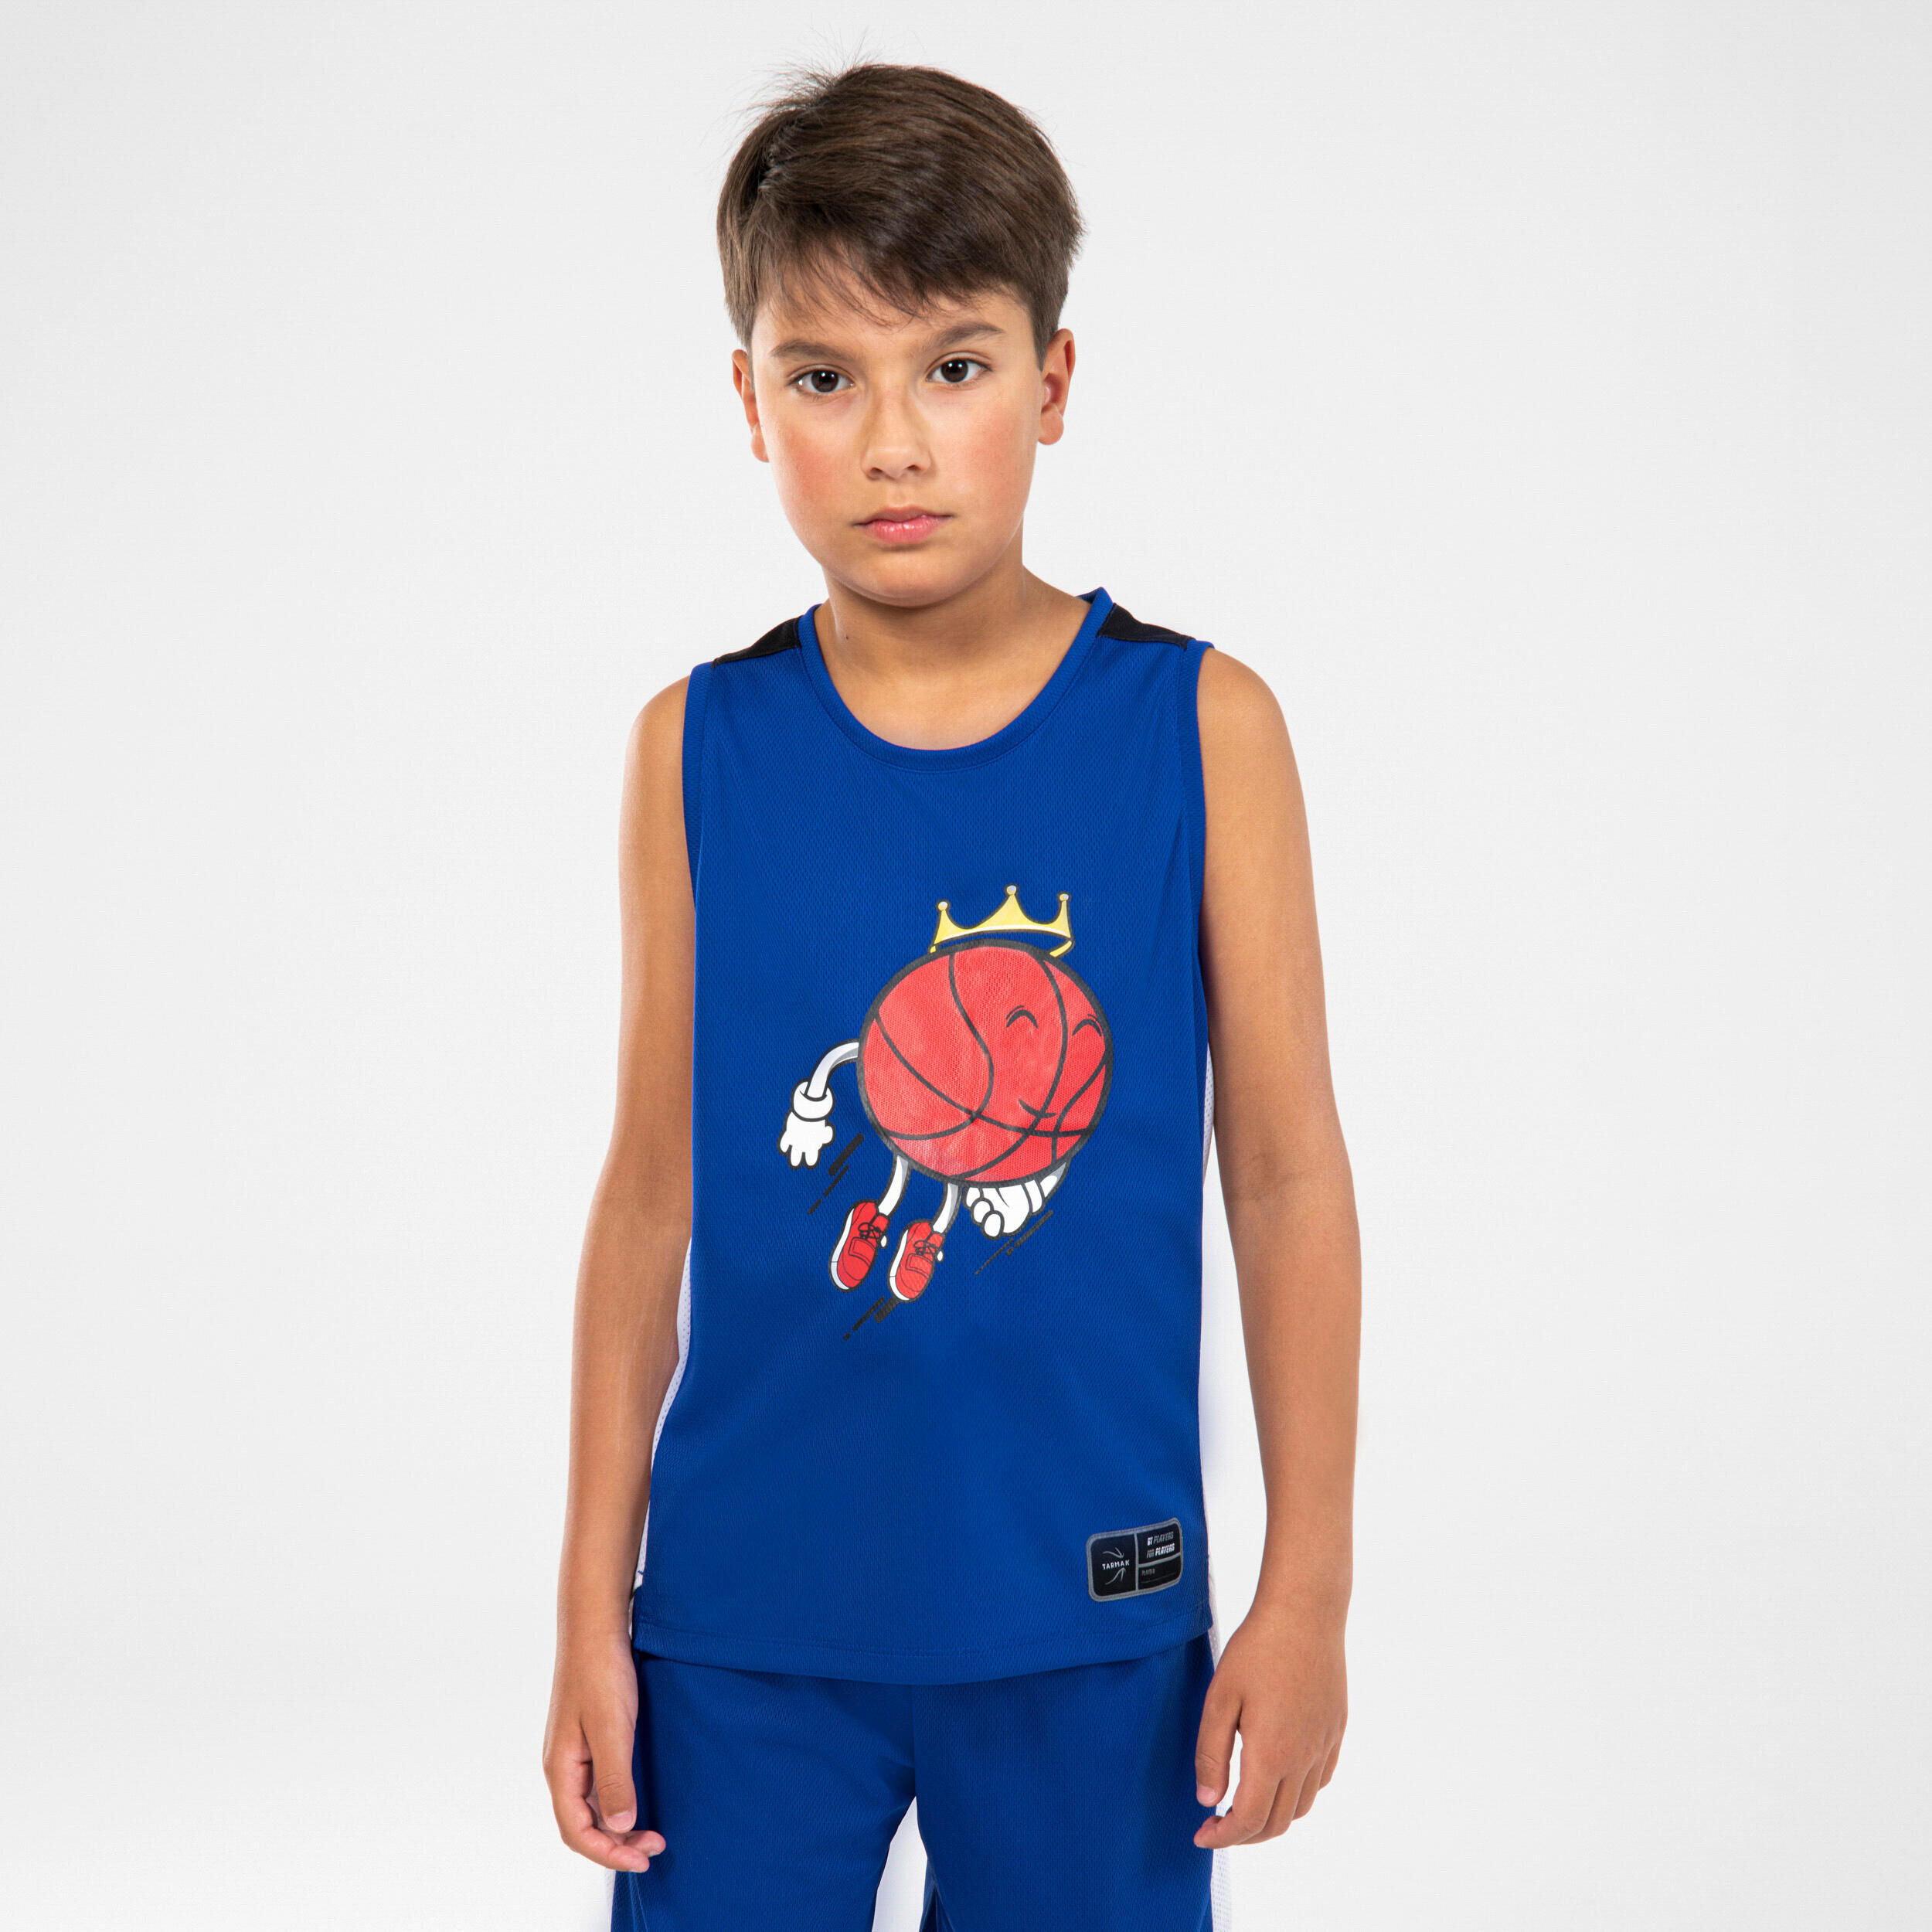 TARMAK Kids' Sleeveless Basketball Jersey T500 - Blue/White